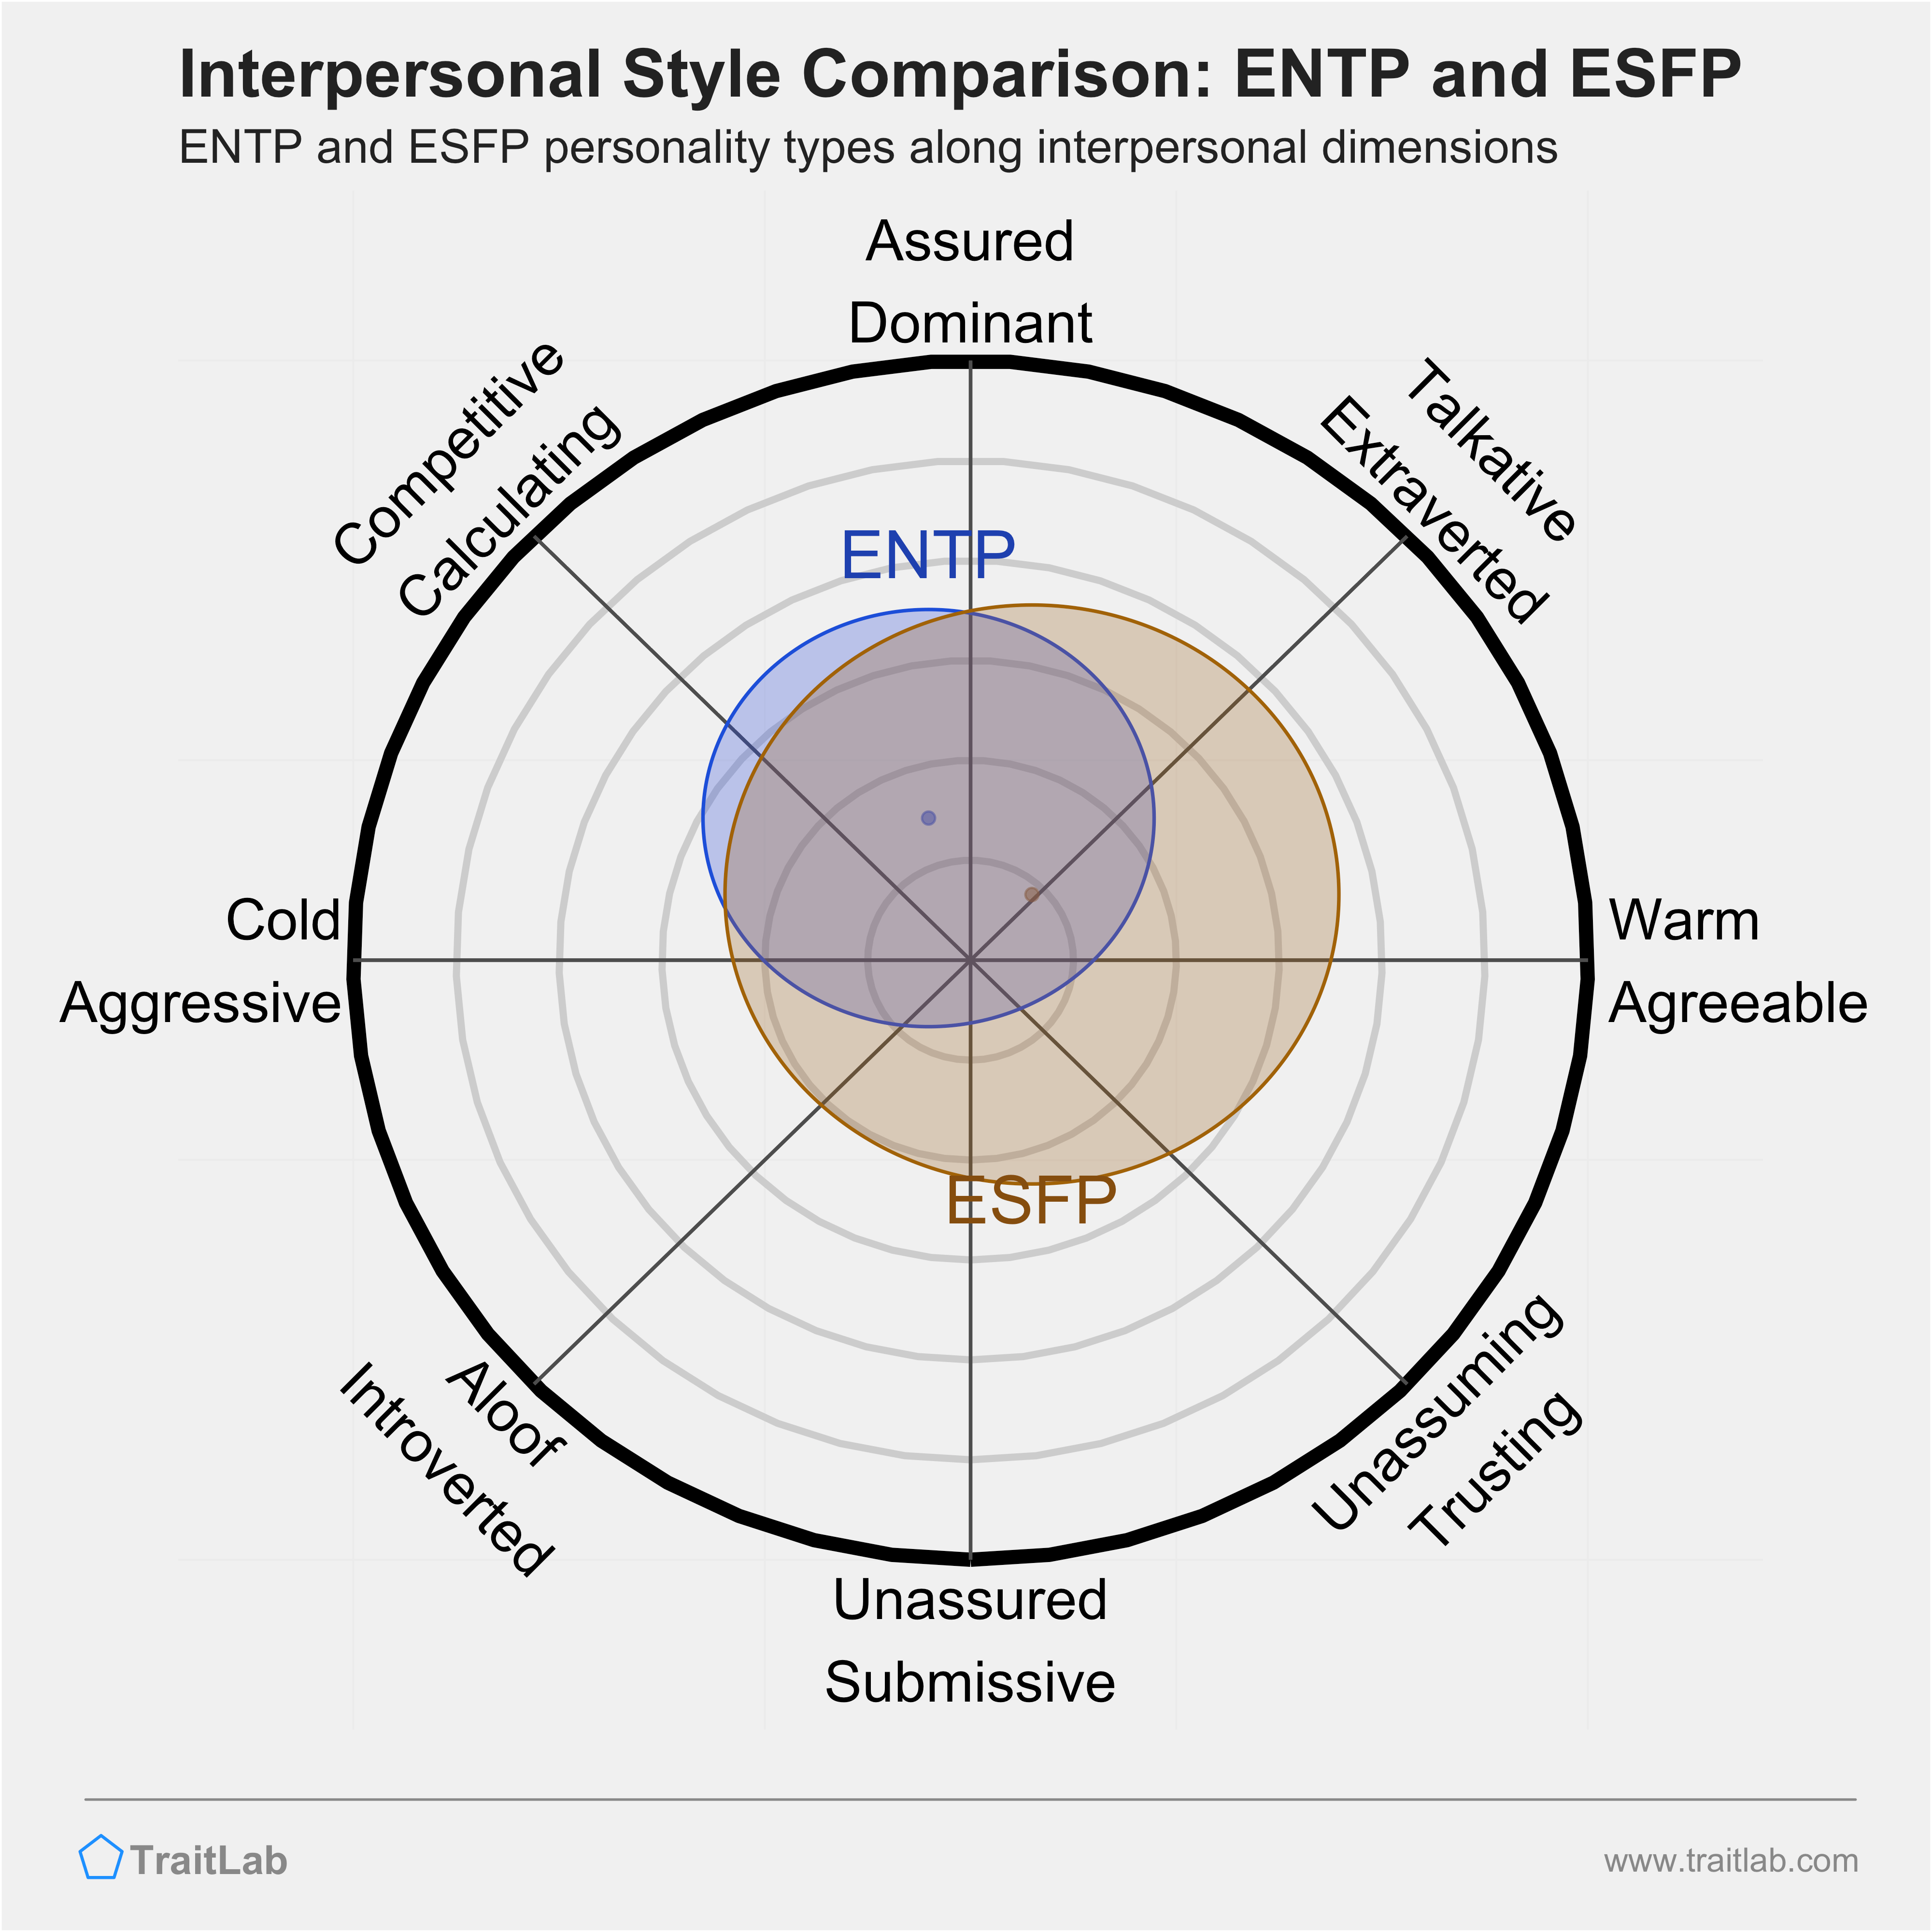 ENTP and ESFP comparison across interpersonal dimensions